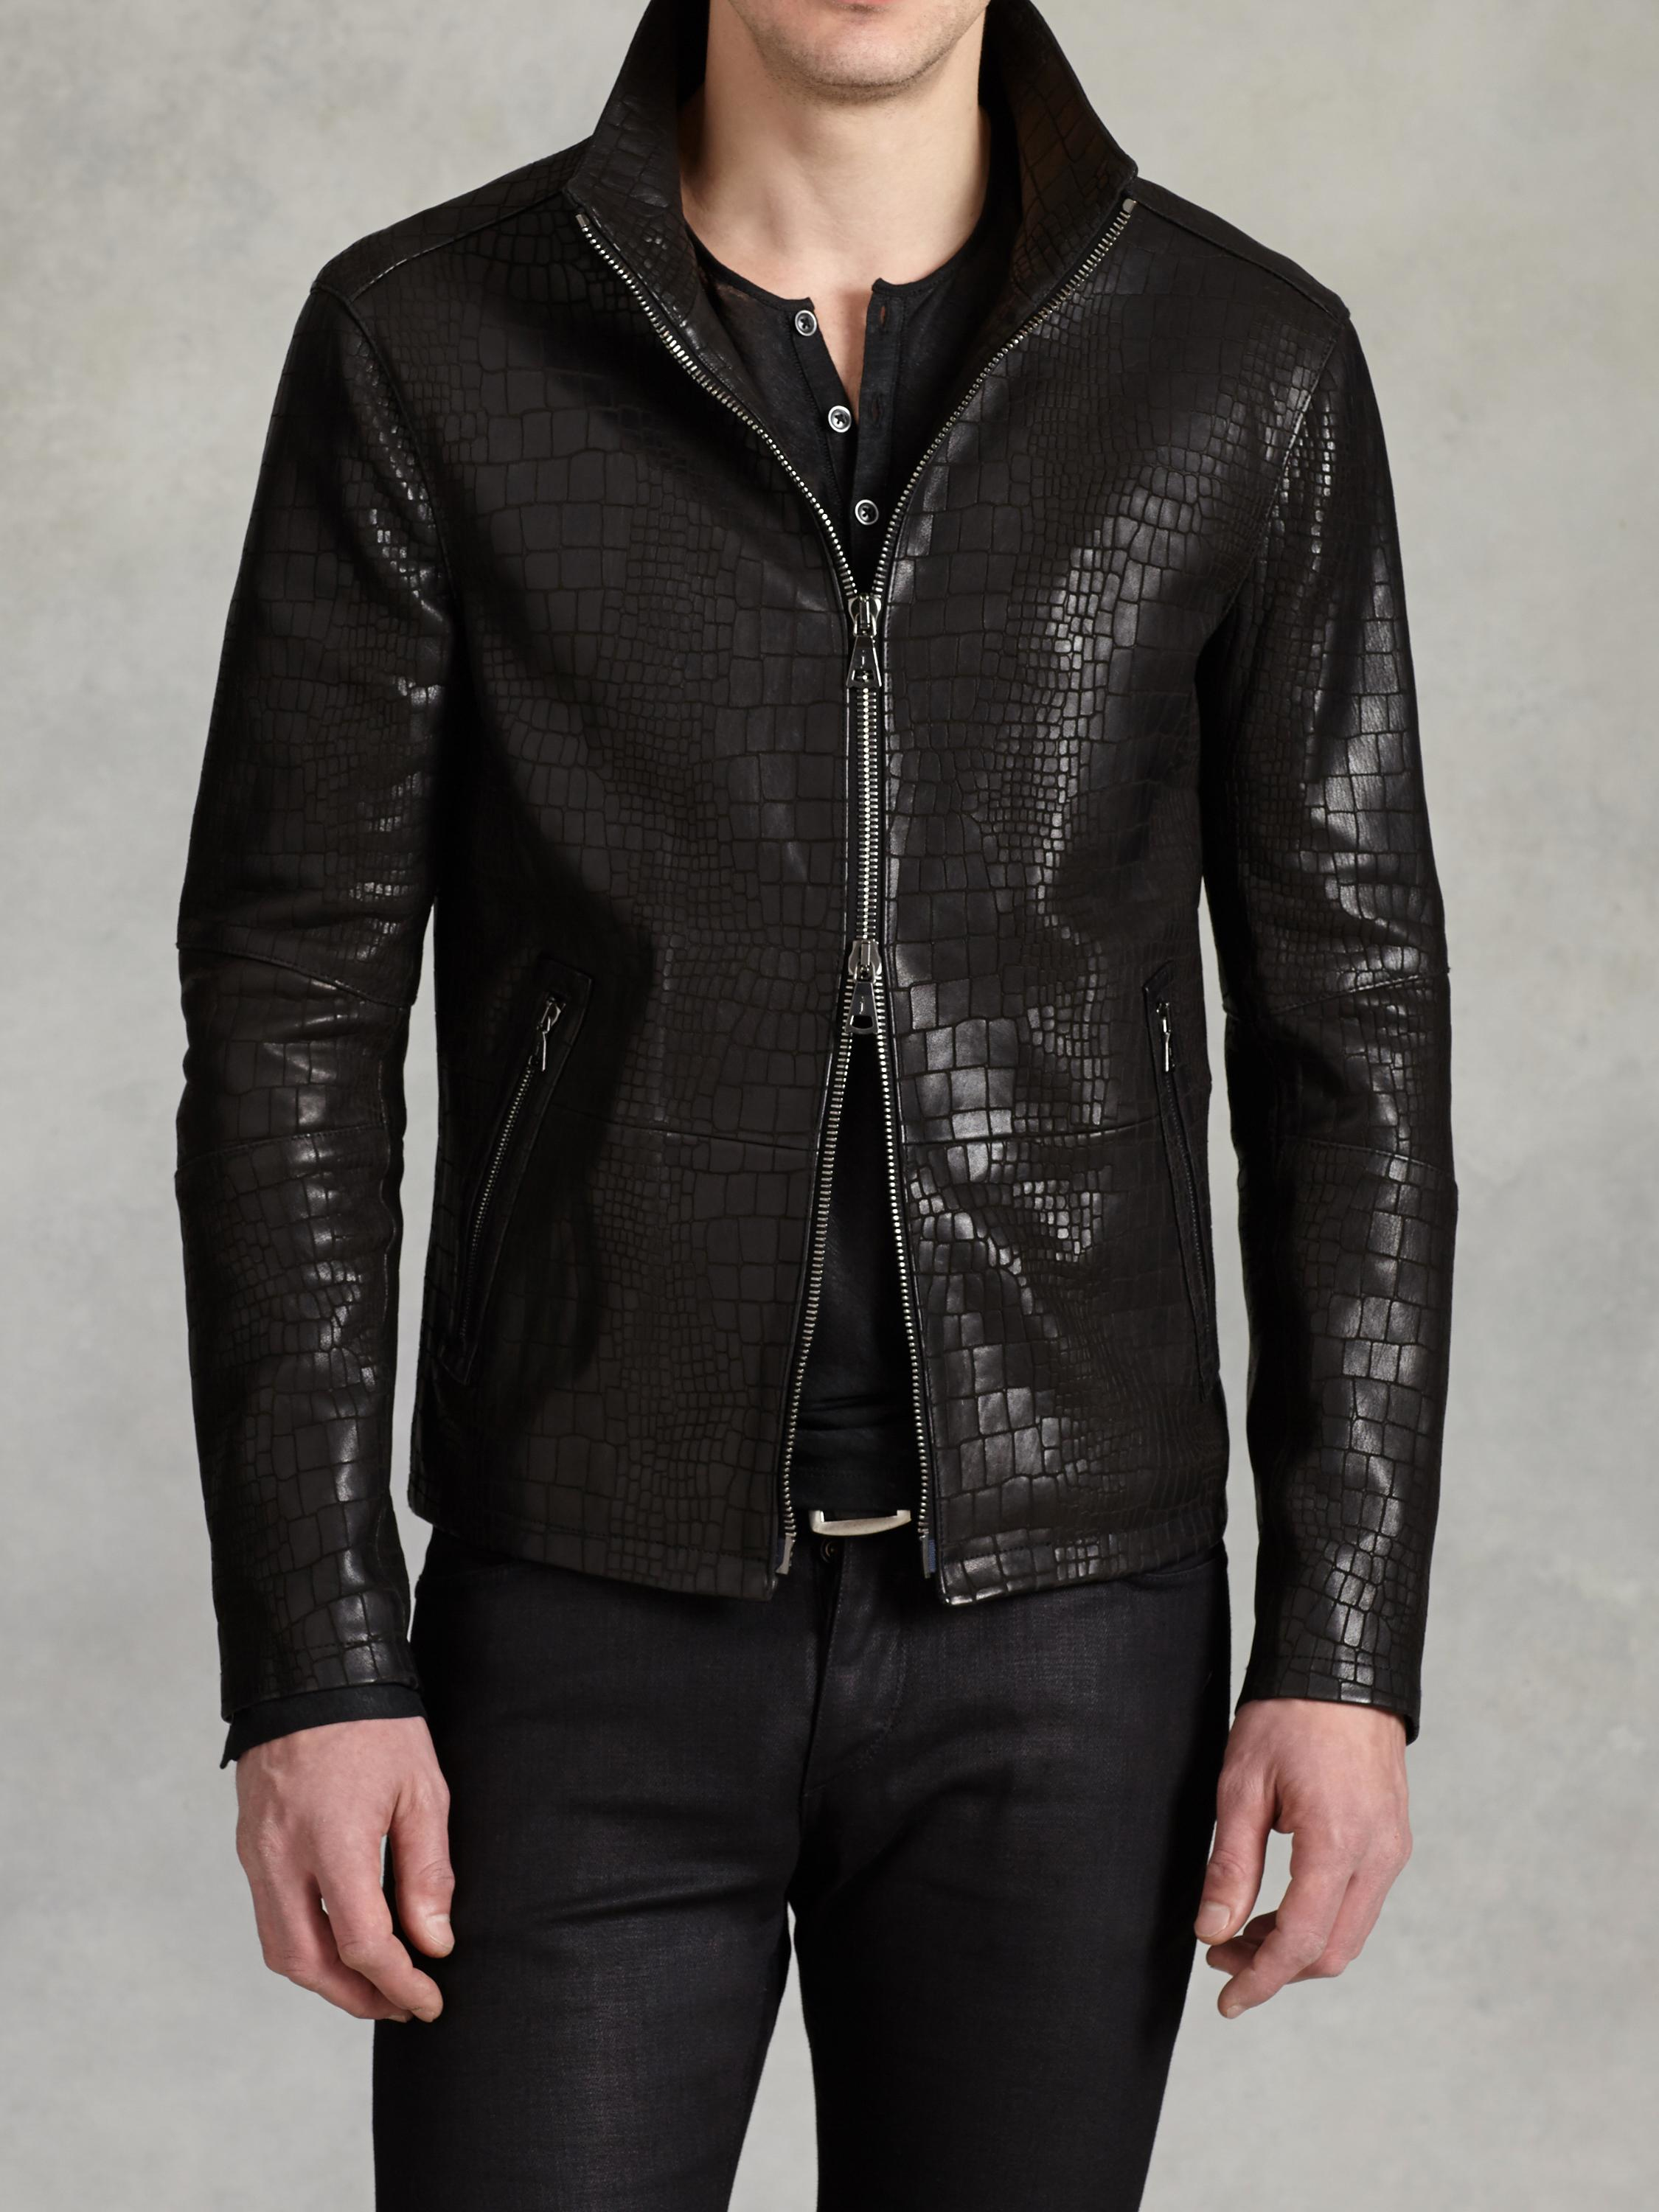 Lyst - John Varvatos Croc-embossed Sheepskin Jacket in Black for Men